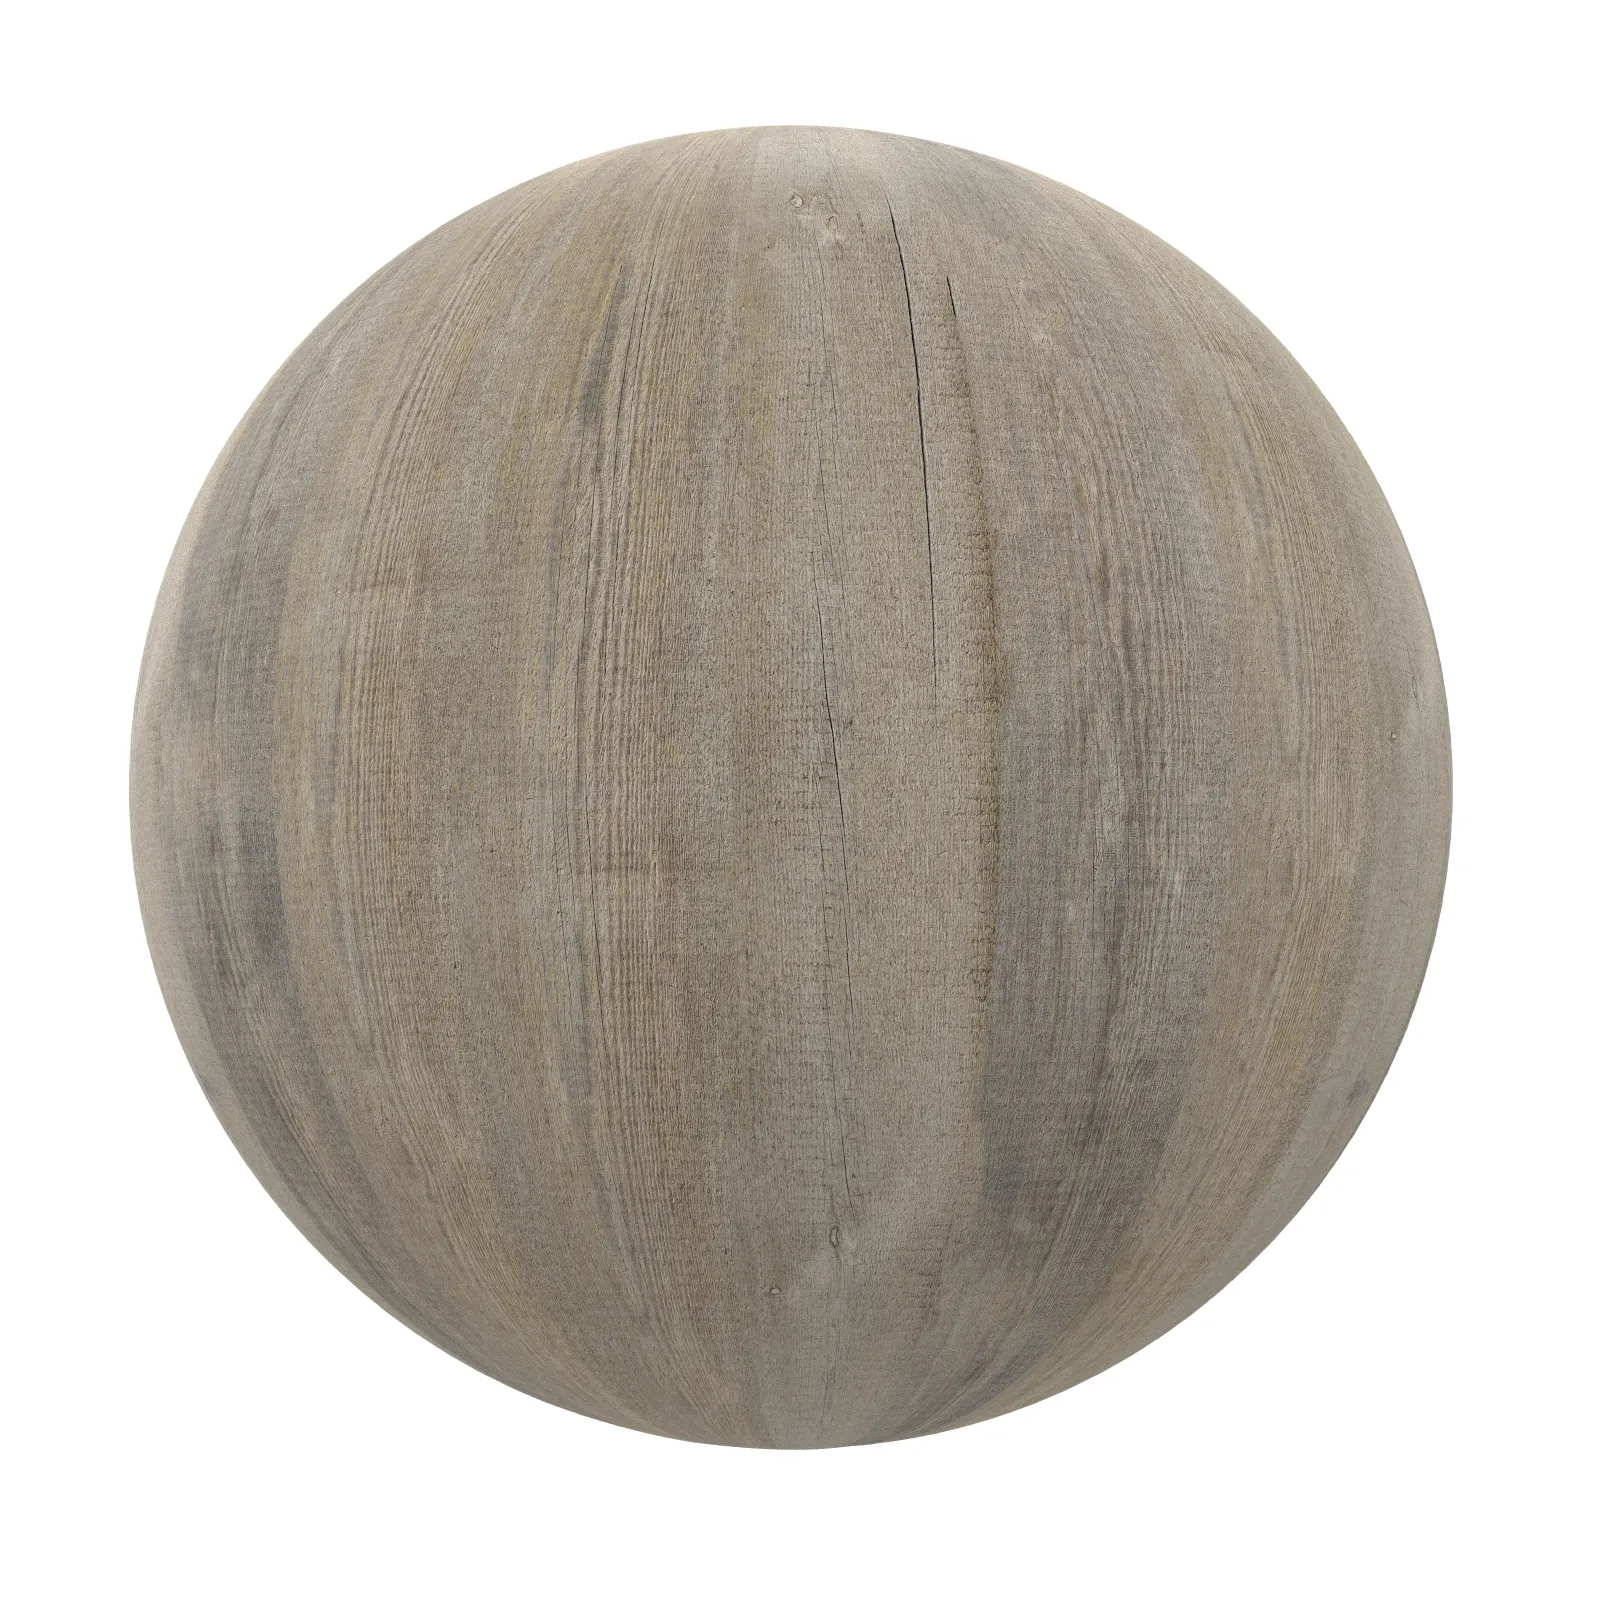 3ds Max Files – Texture – 8 – Wood Texture – 114 – Wood Texture by Minh Nguyen